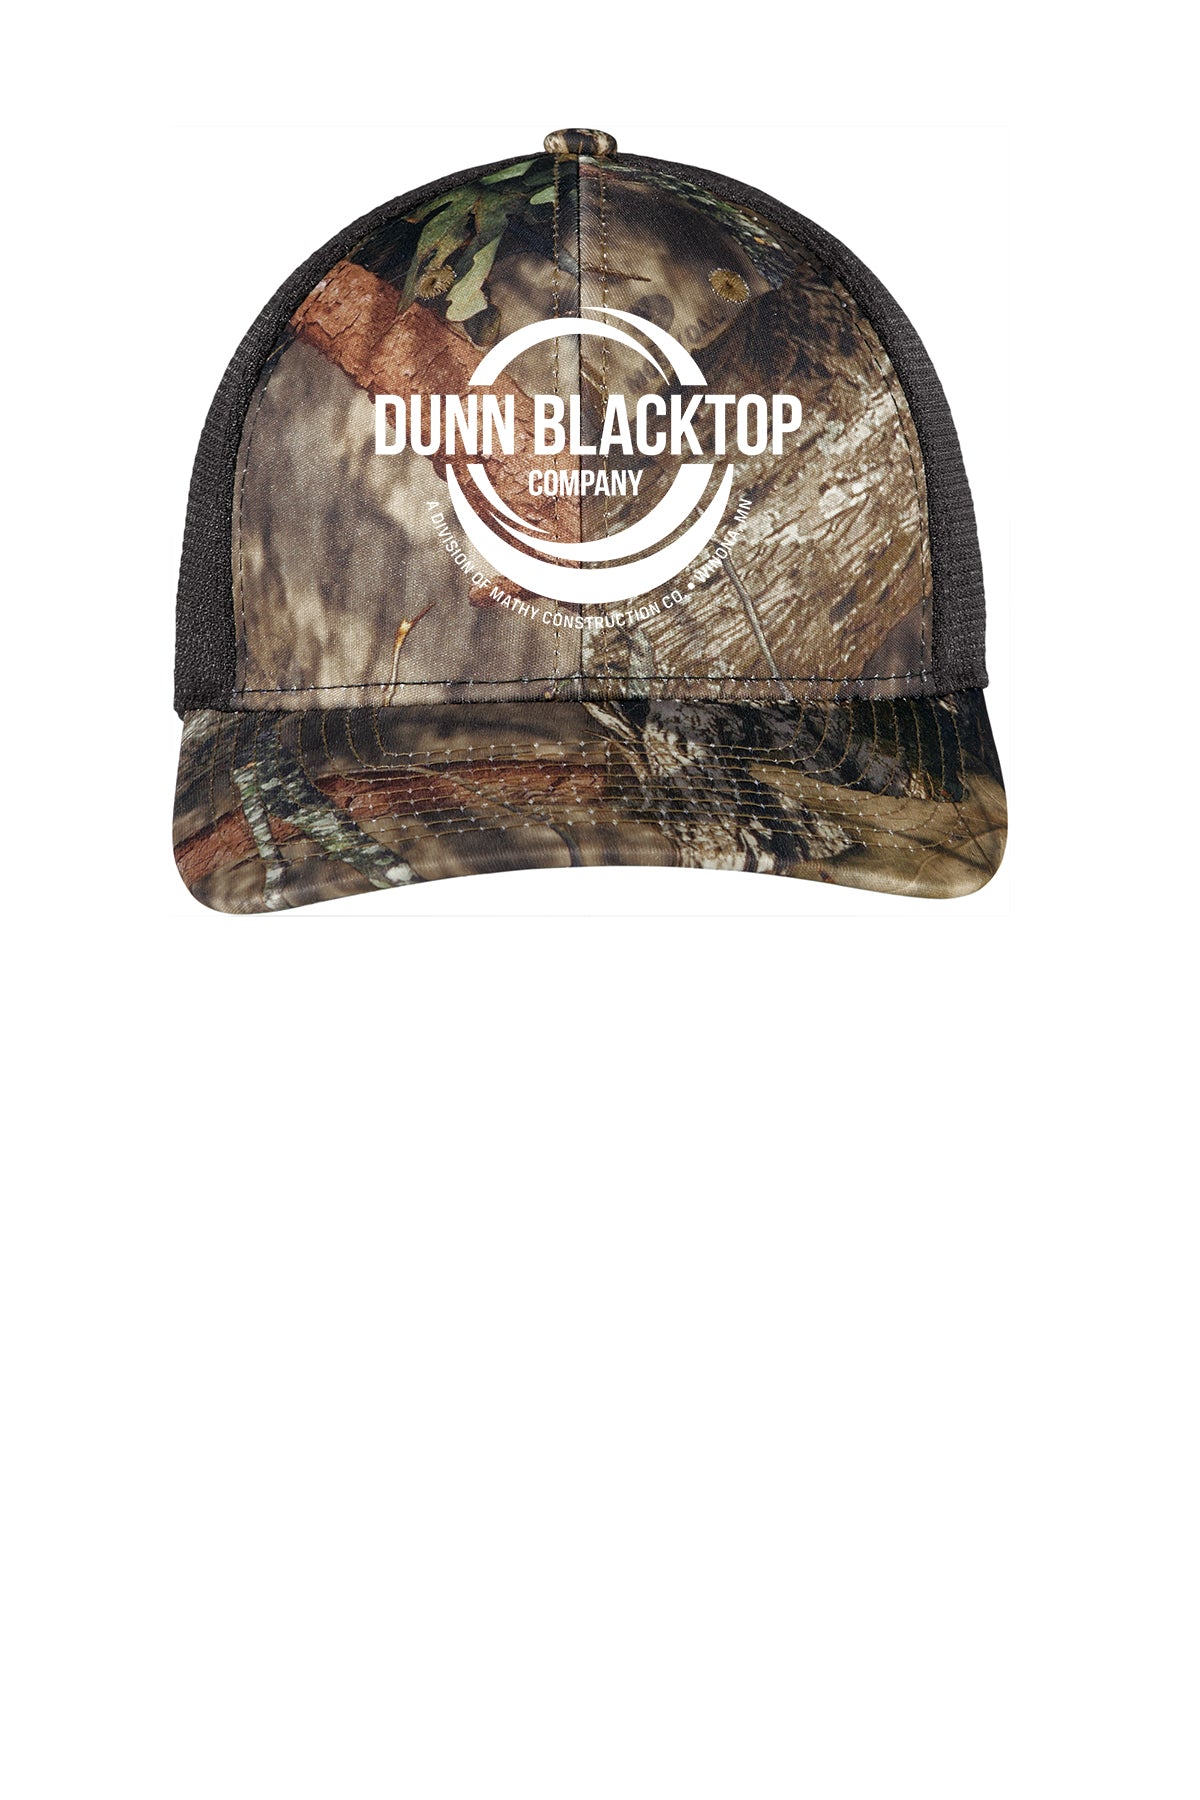 Dunn Blacktop Company Limited Edition Camo Trucker Cap